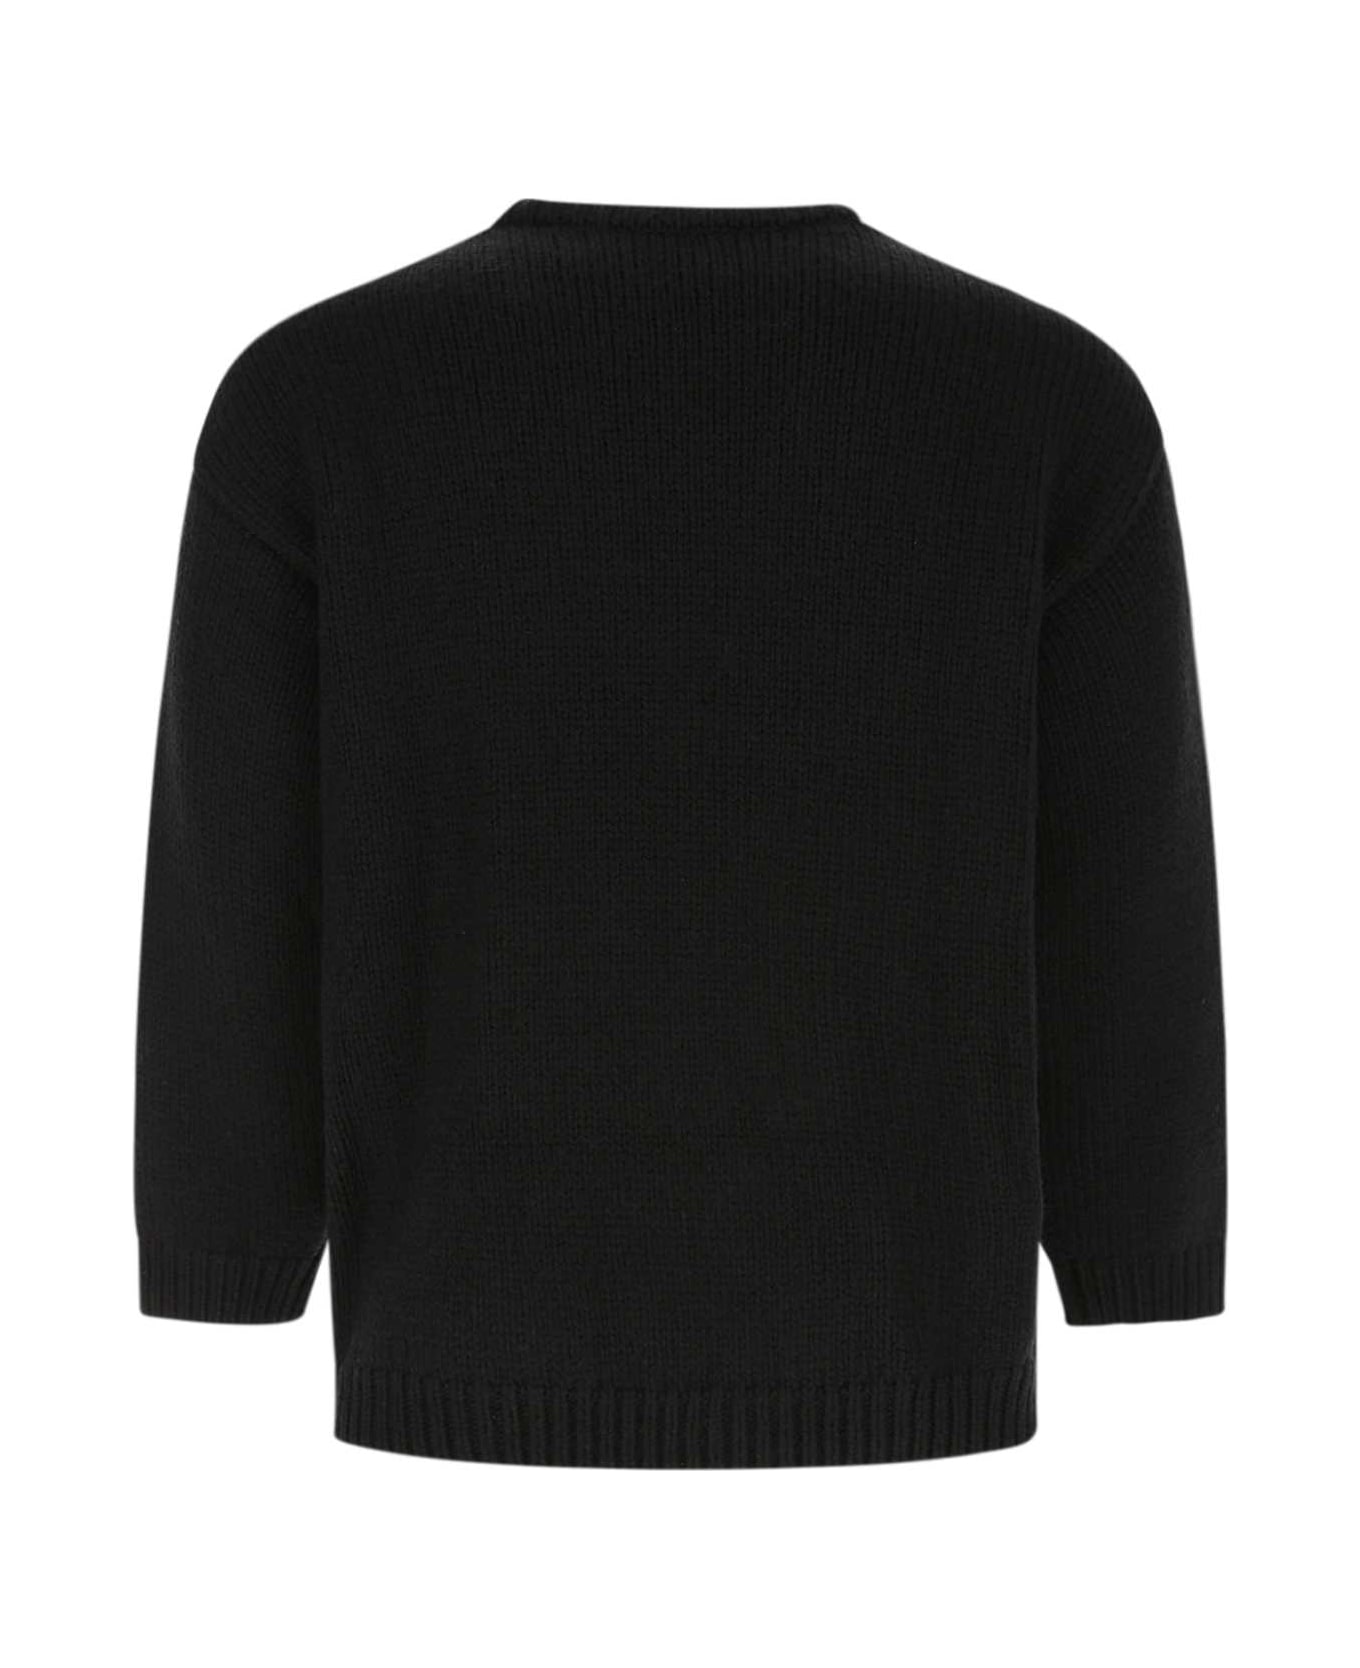 Valentino Garavani Black Wool Sweater - N01